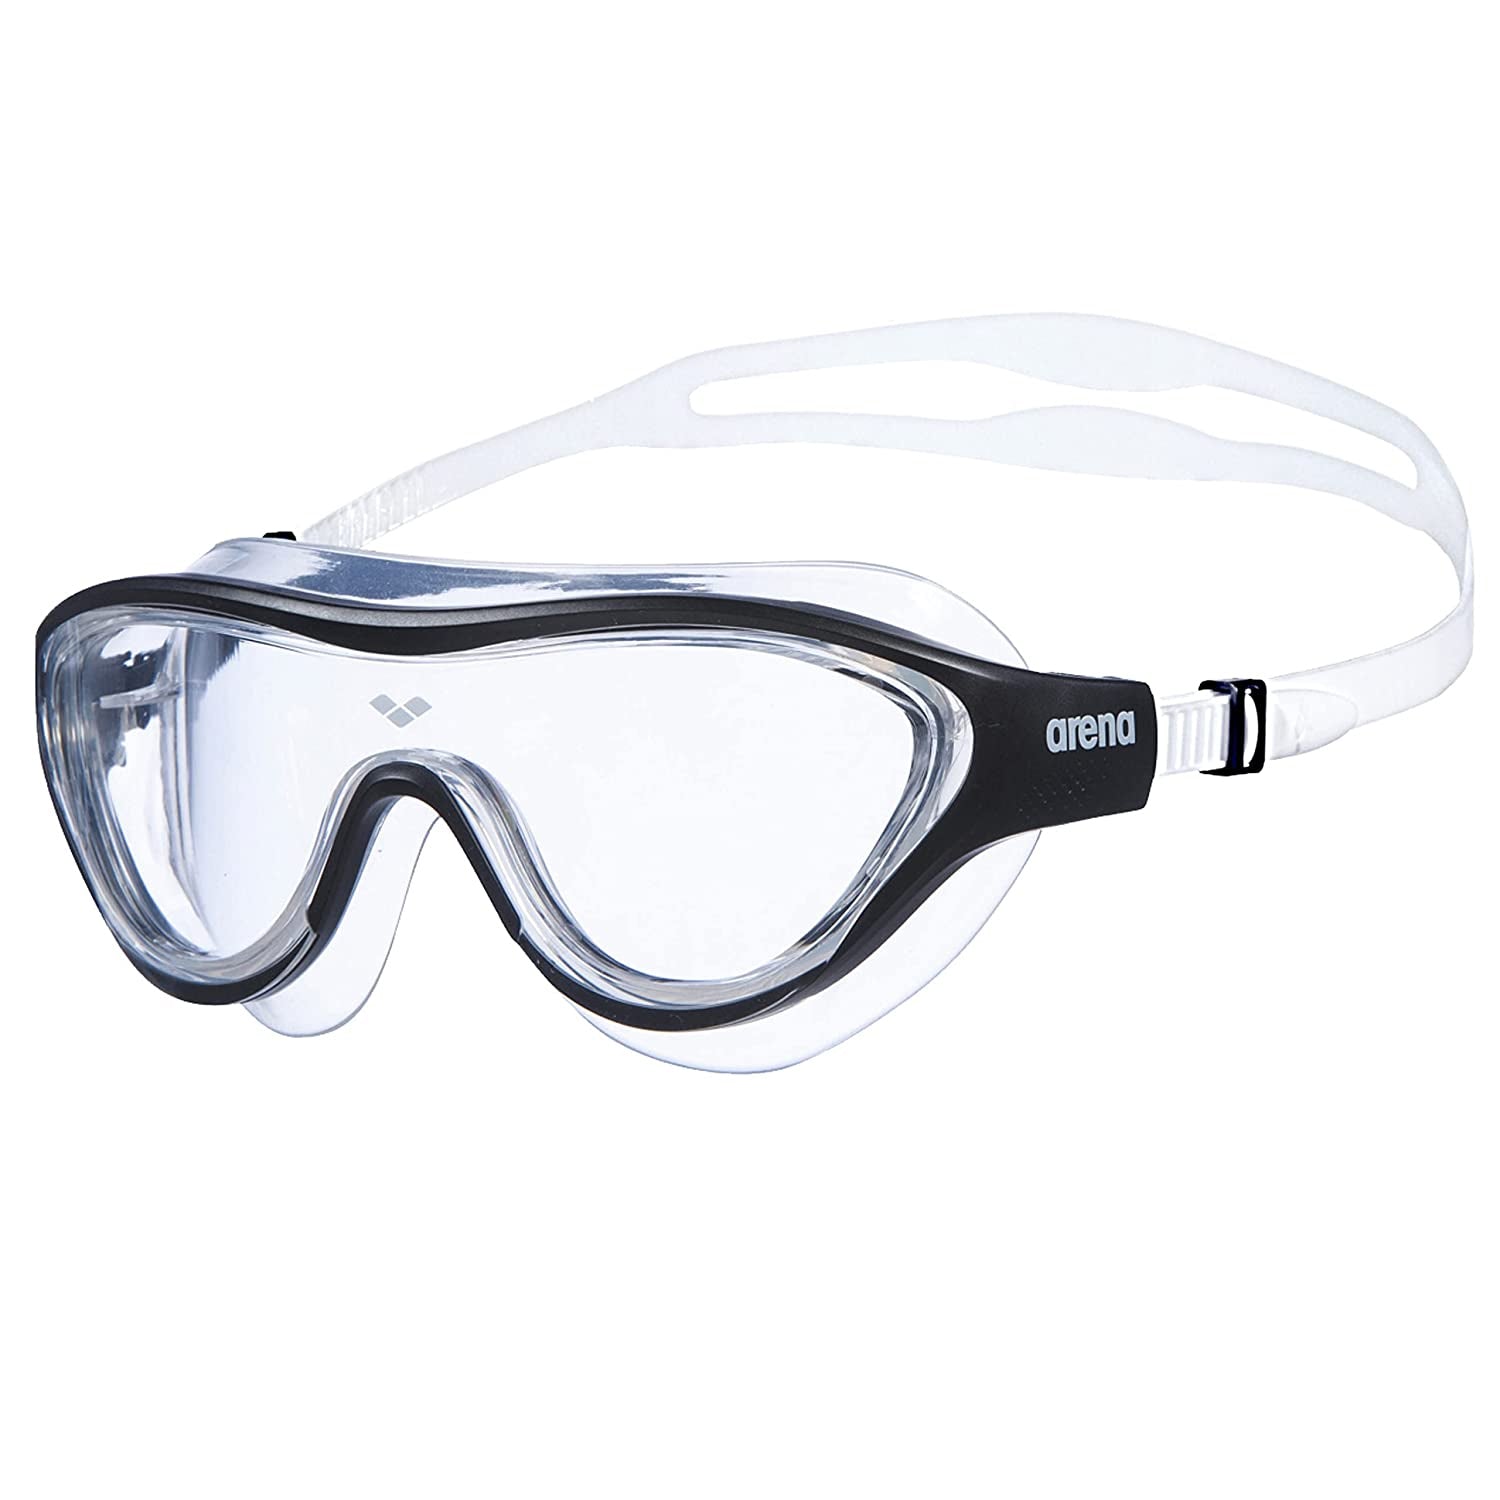 Arena The One Mask Swim Goggles, Clear/Black/Transparent - Adult - Best Price online Prokicksports.com